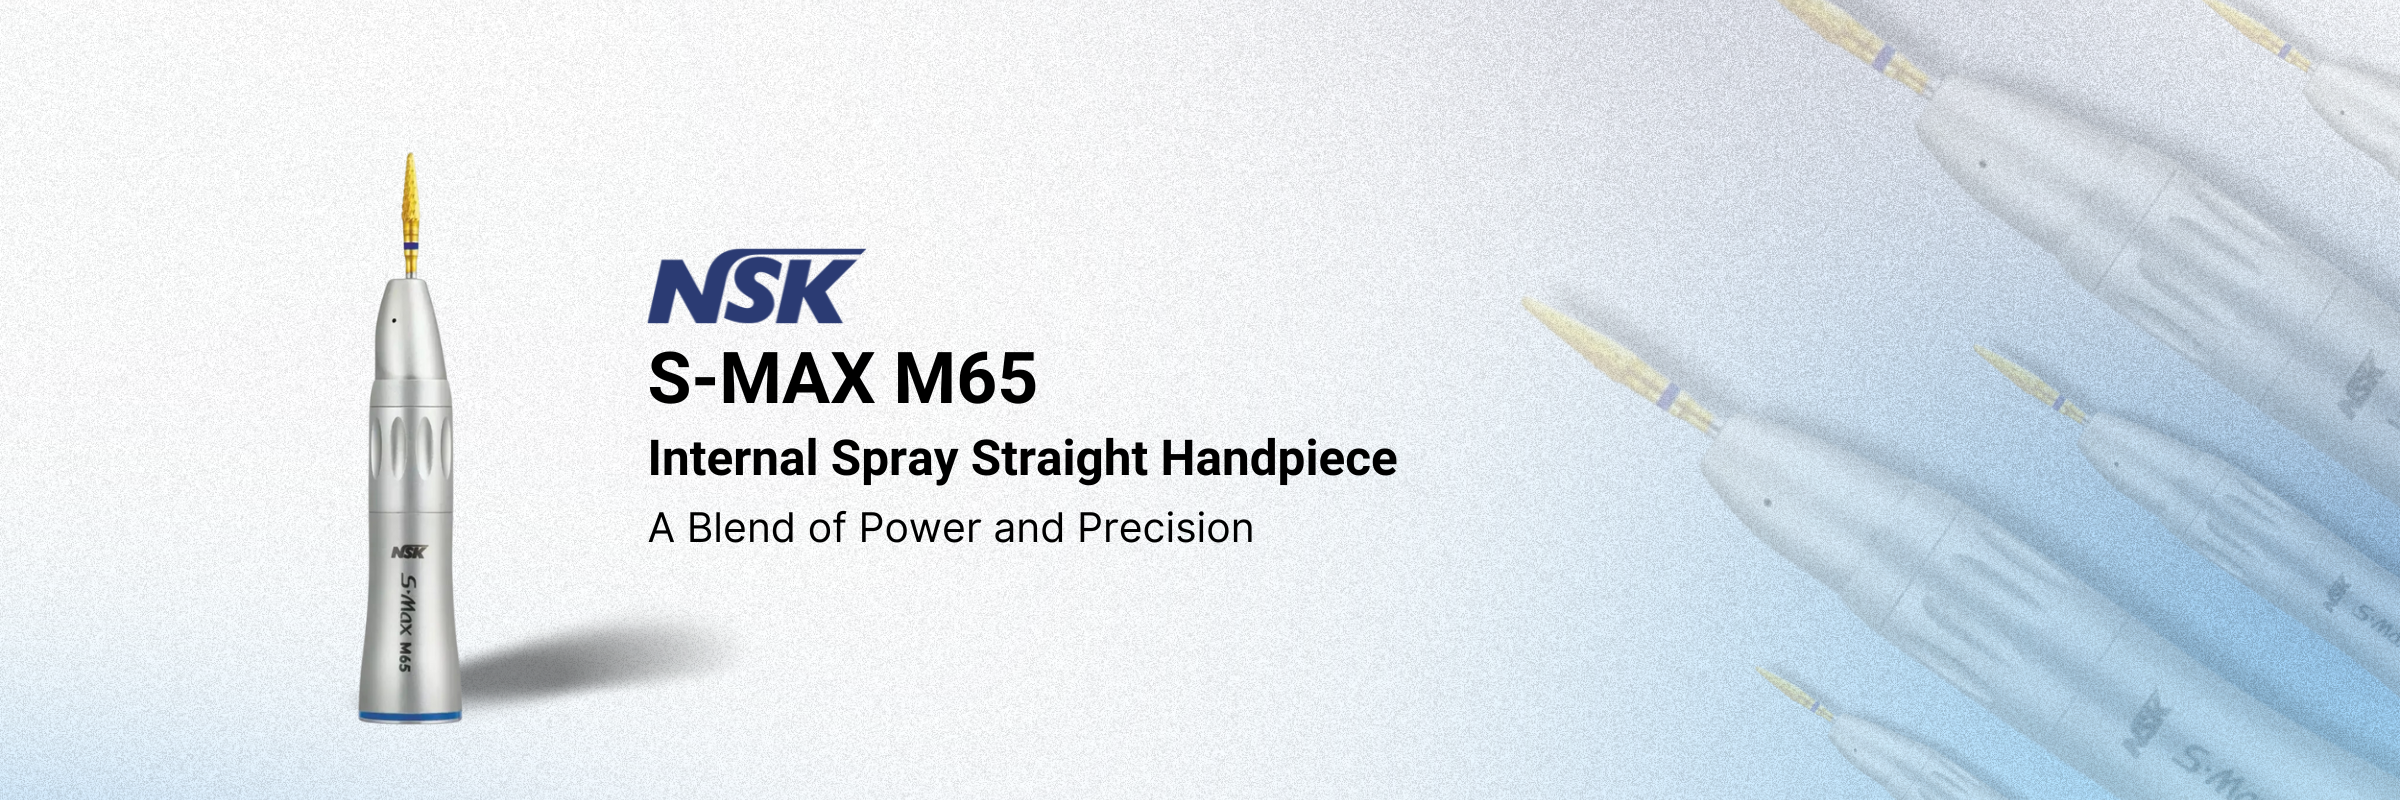 NSK S-Max M65 Internal Spray Straight Handpiece